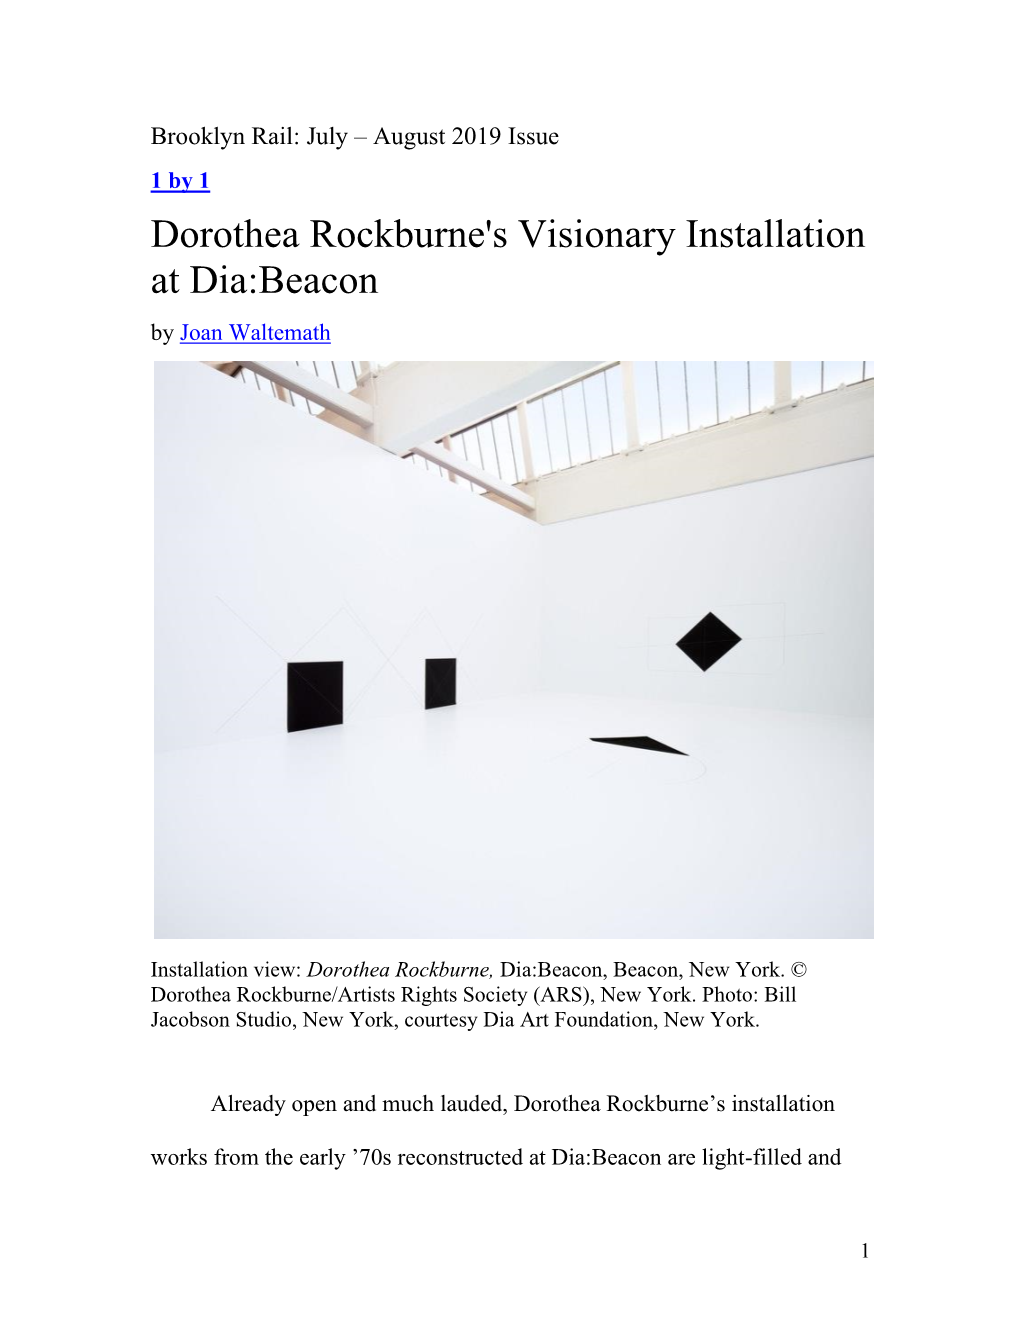 Dorothea Rockburne's Visionary Installation at Dia:Beacon by Joan Waltemath